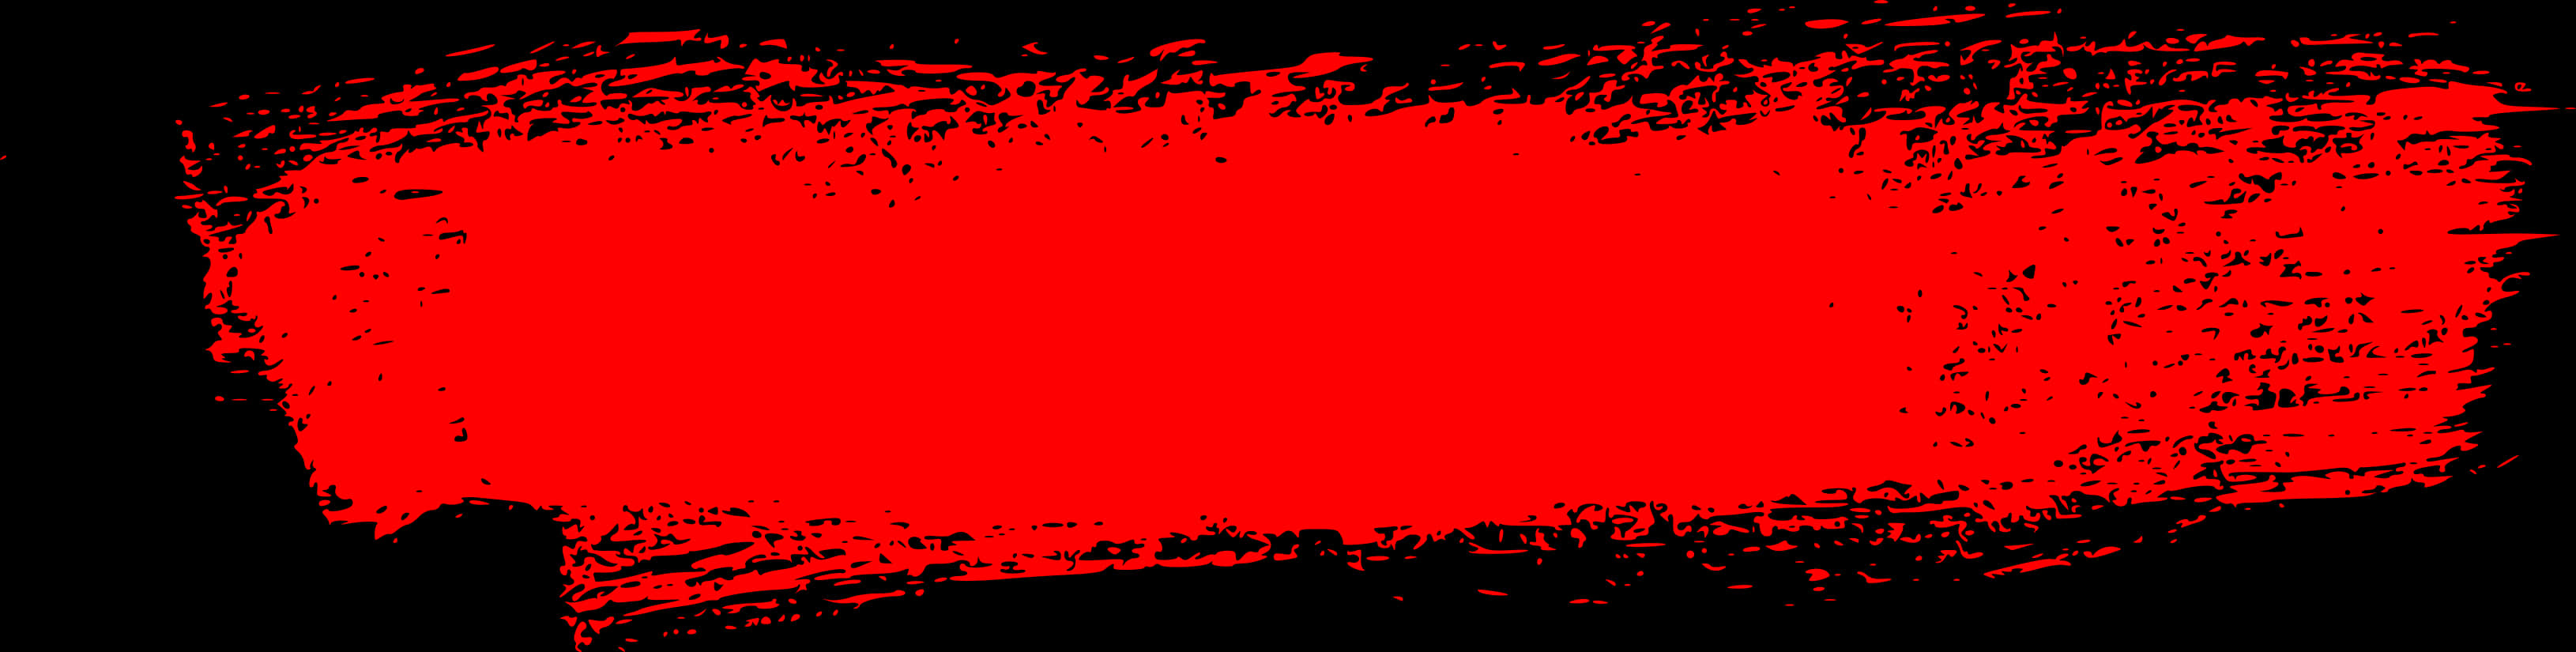 A Red Rectangular Frame With Black Border